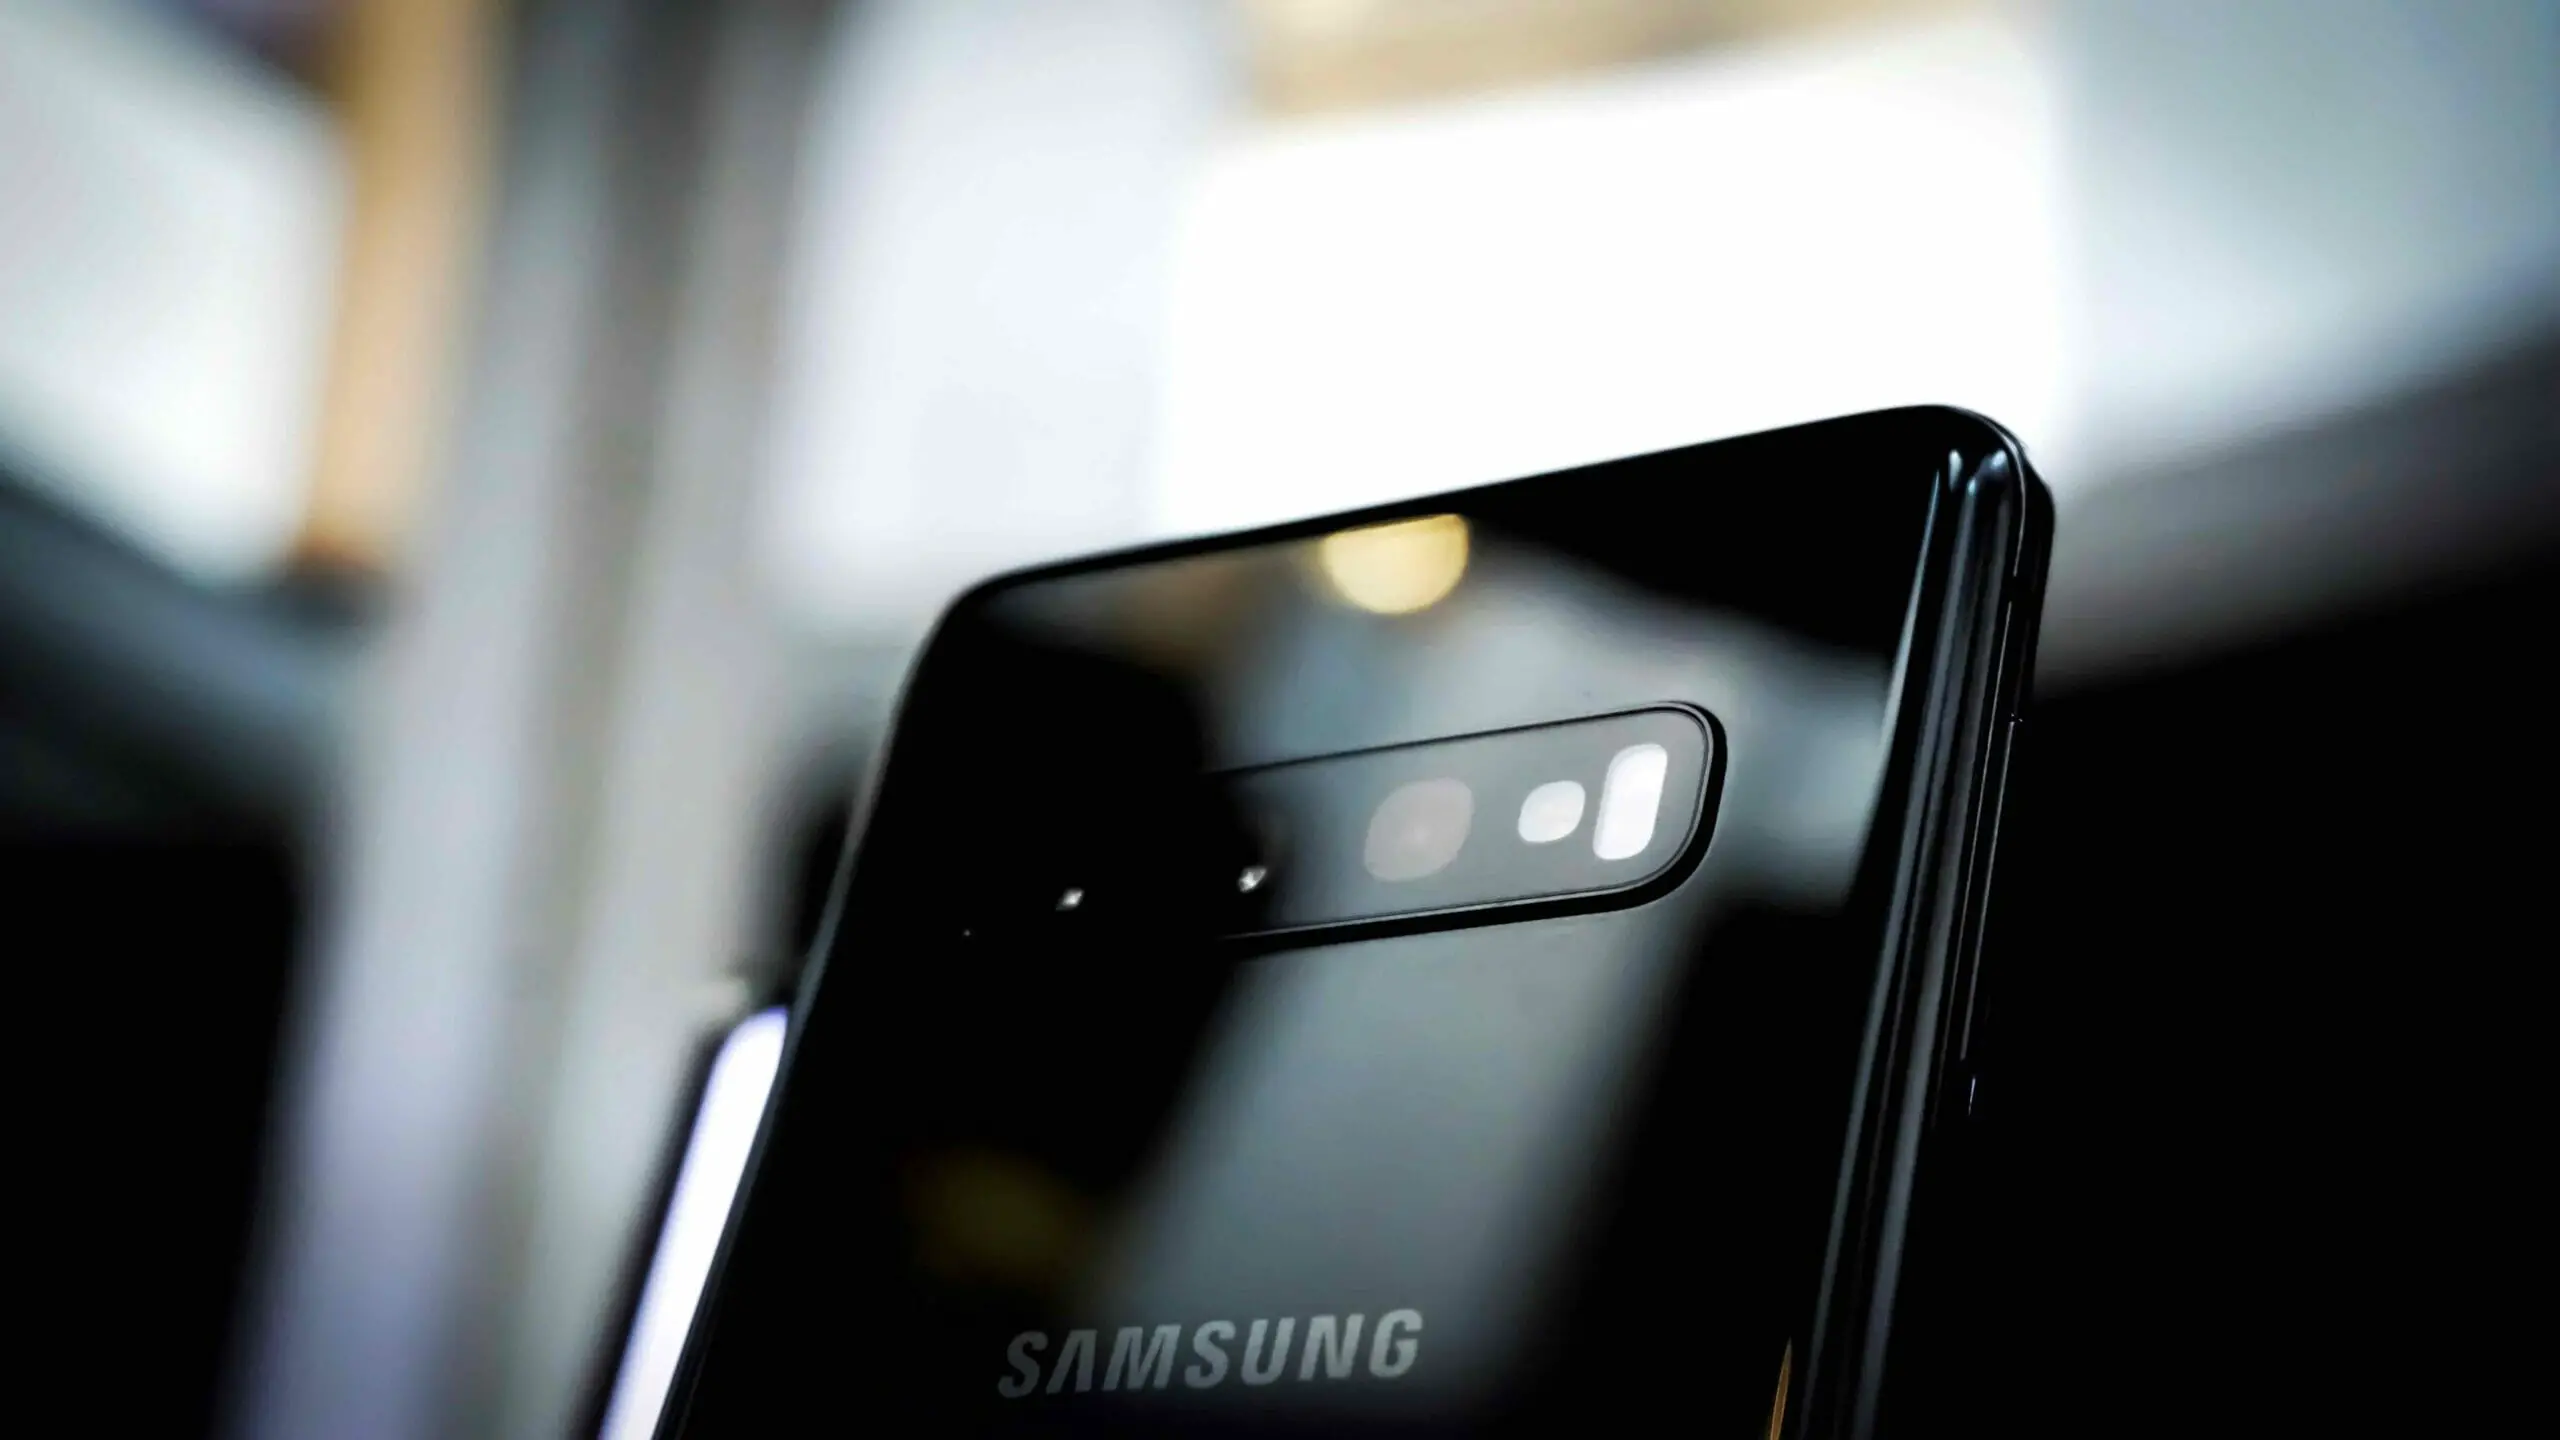 A black Samsung phone